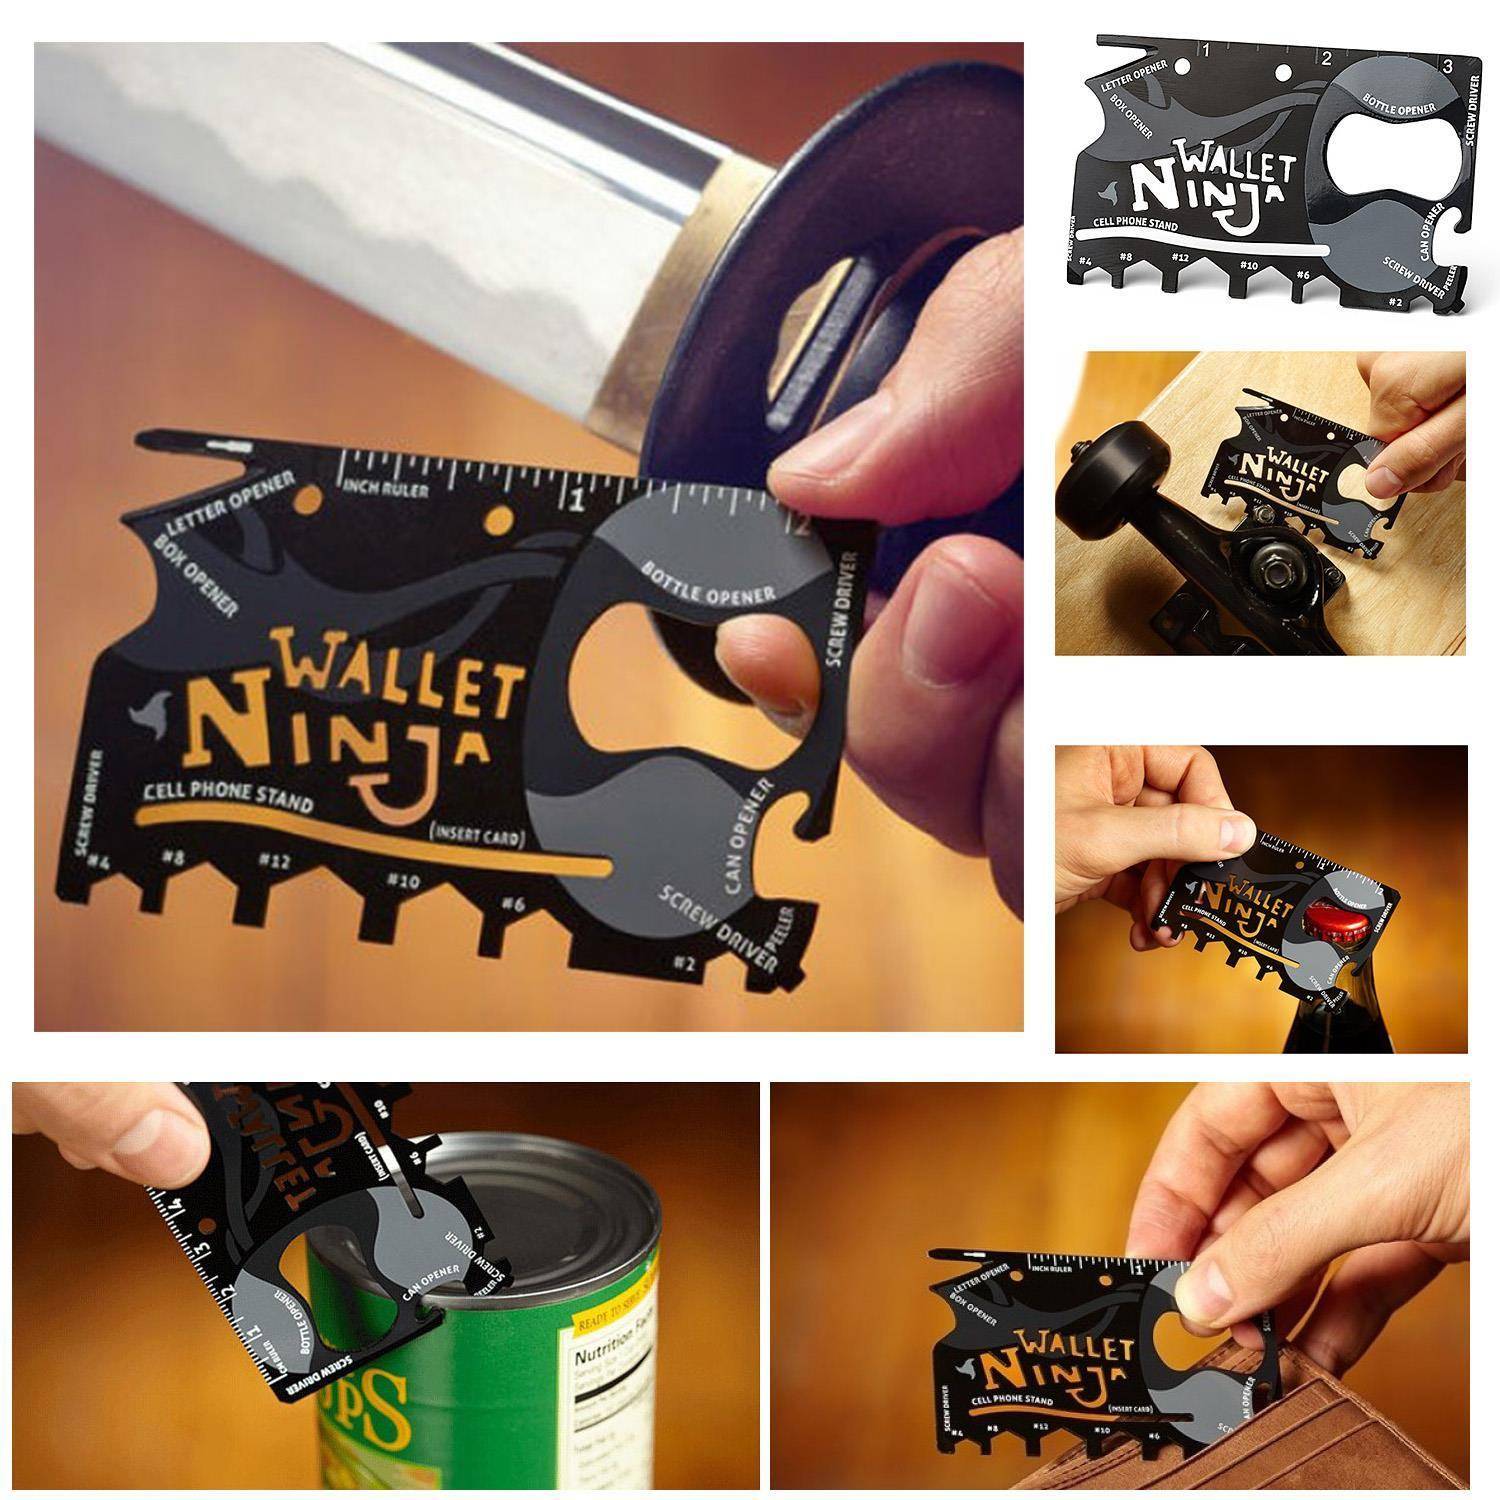 Ninja Wallet 18 in 1 Multi Tool Kit